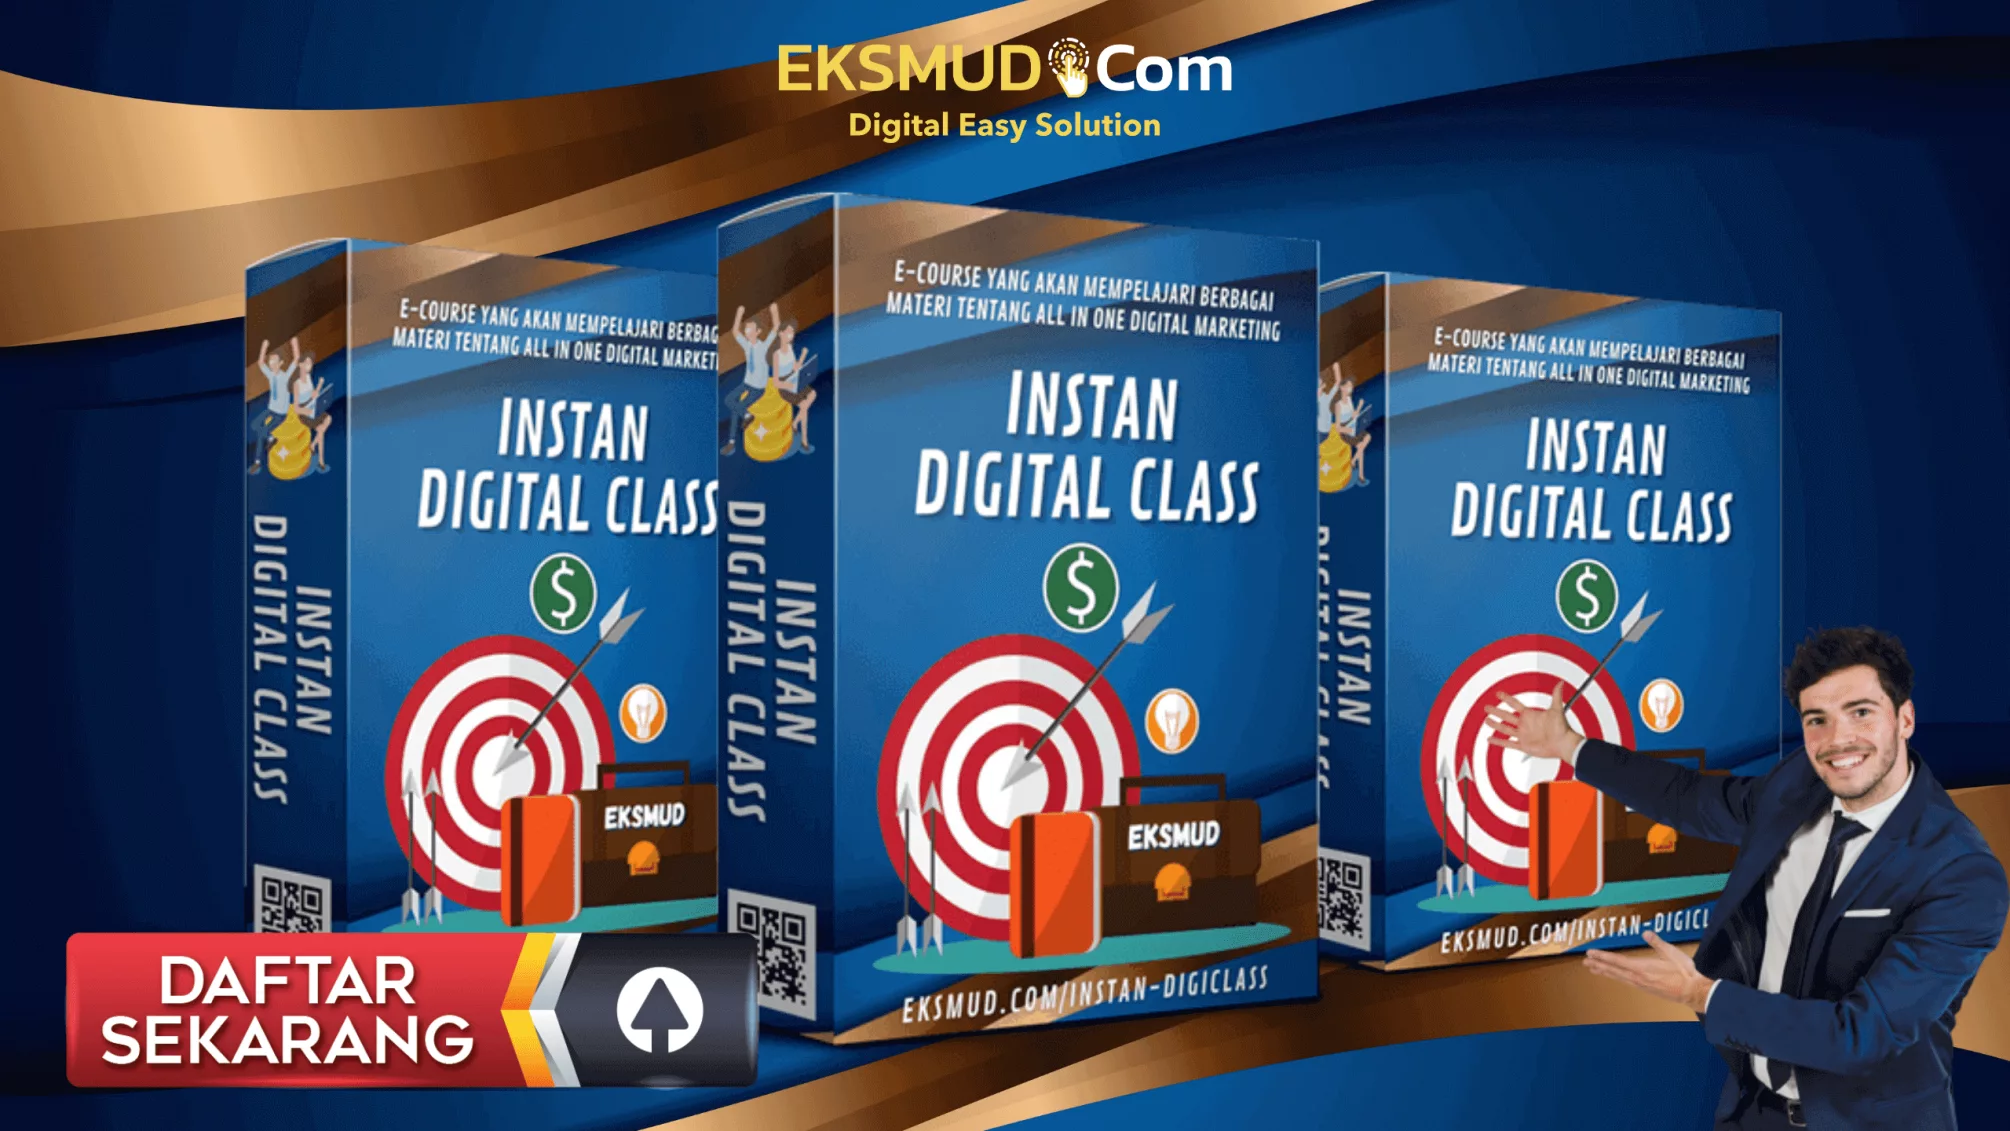 Instan Digital Class